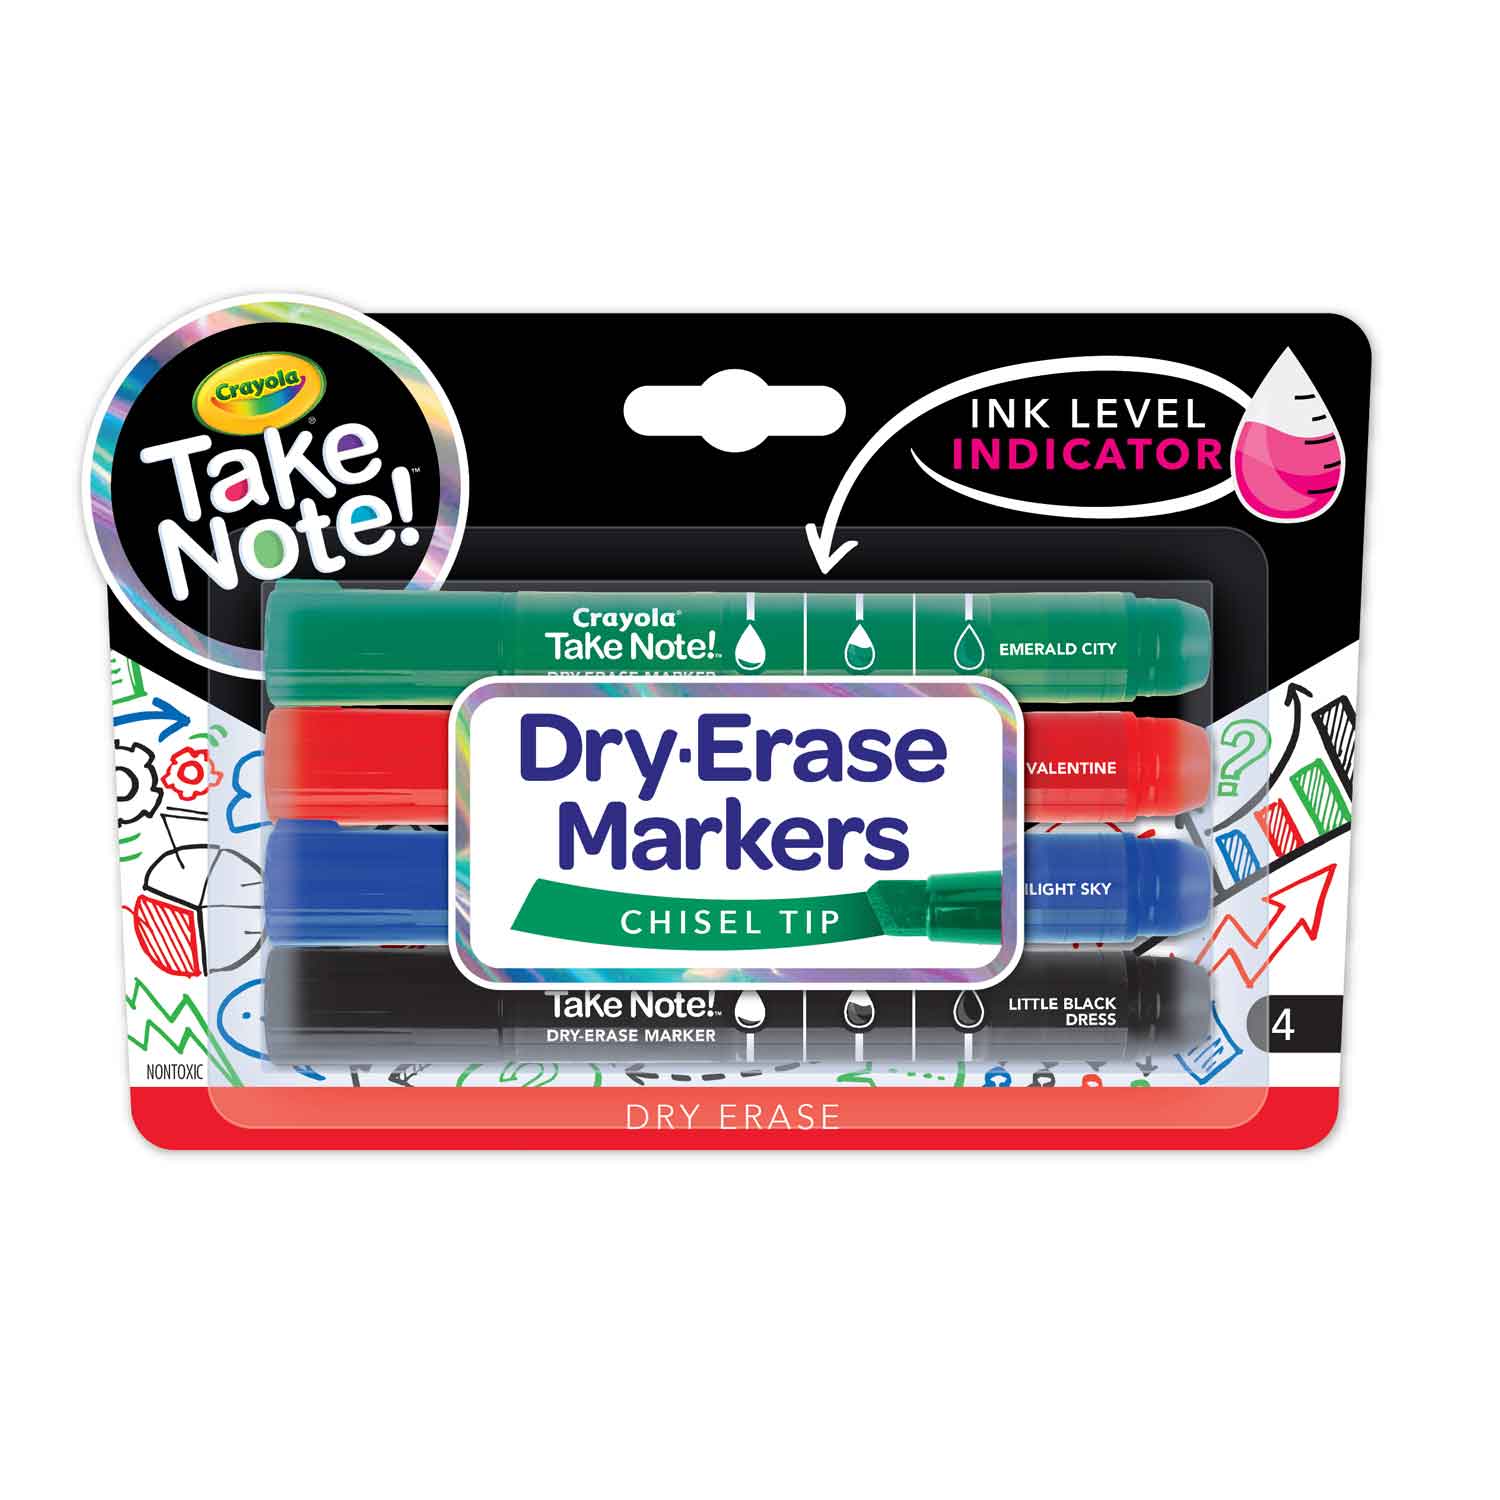 Crayola Visi Max Dry Erase Markers - 4 Count